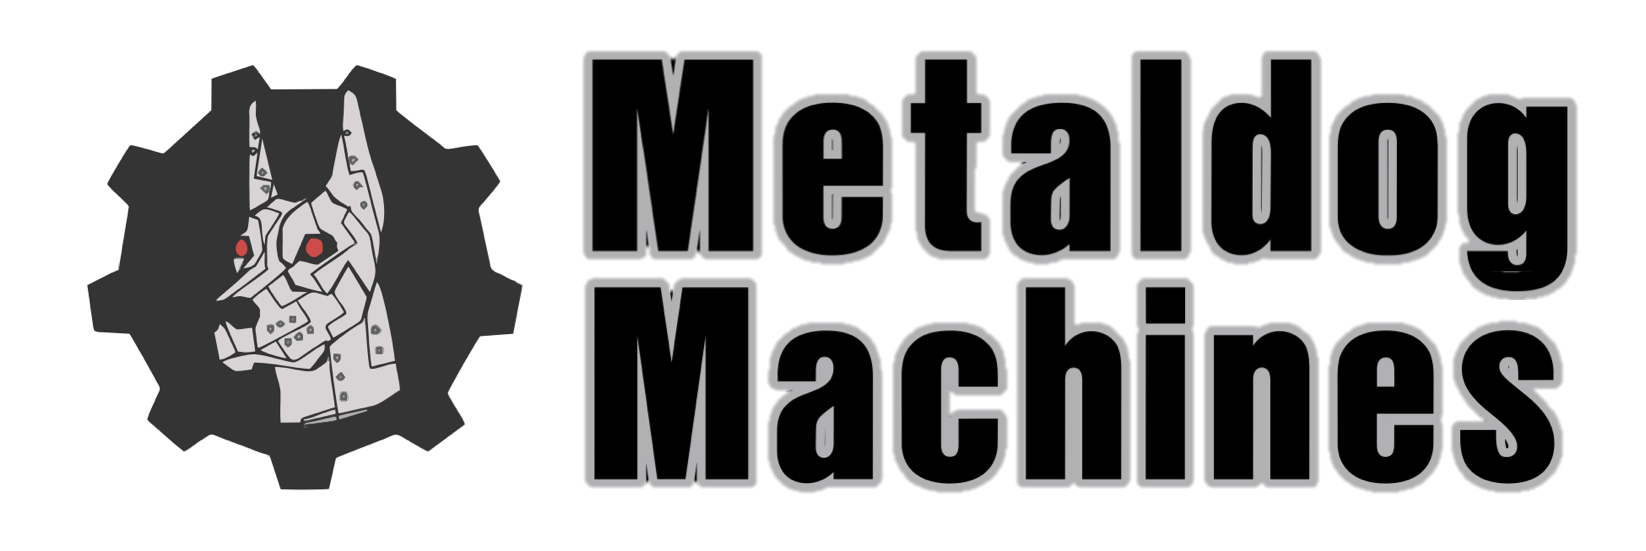 Metaldog Machines<br /<br />Vehicle Customization & Computer Repair